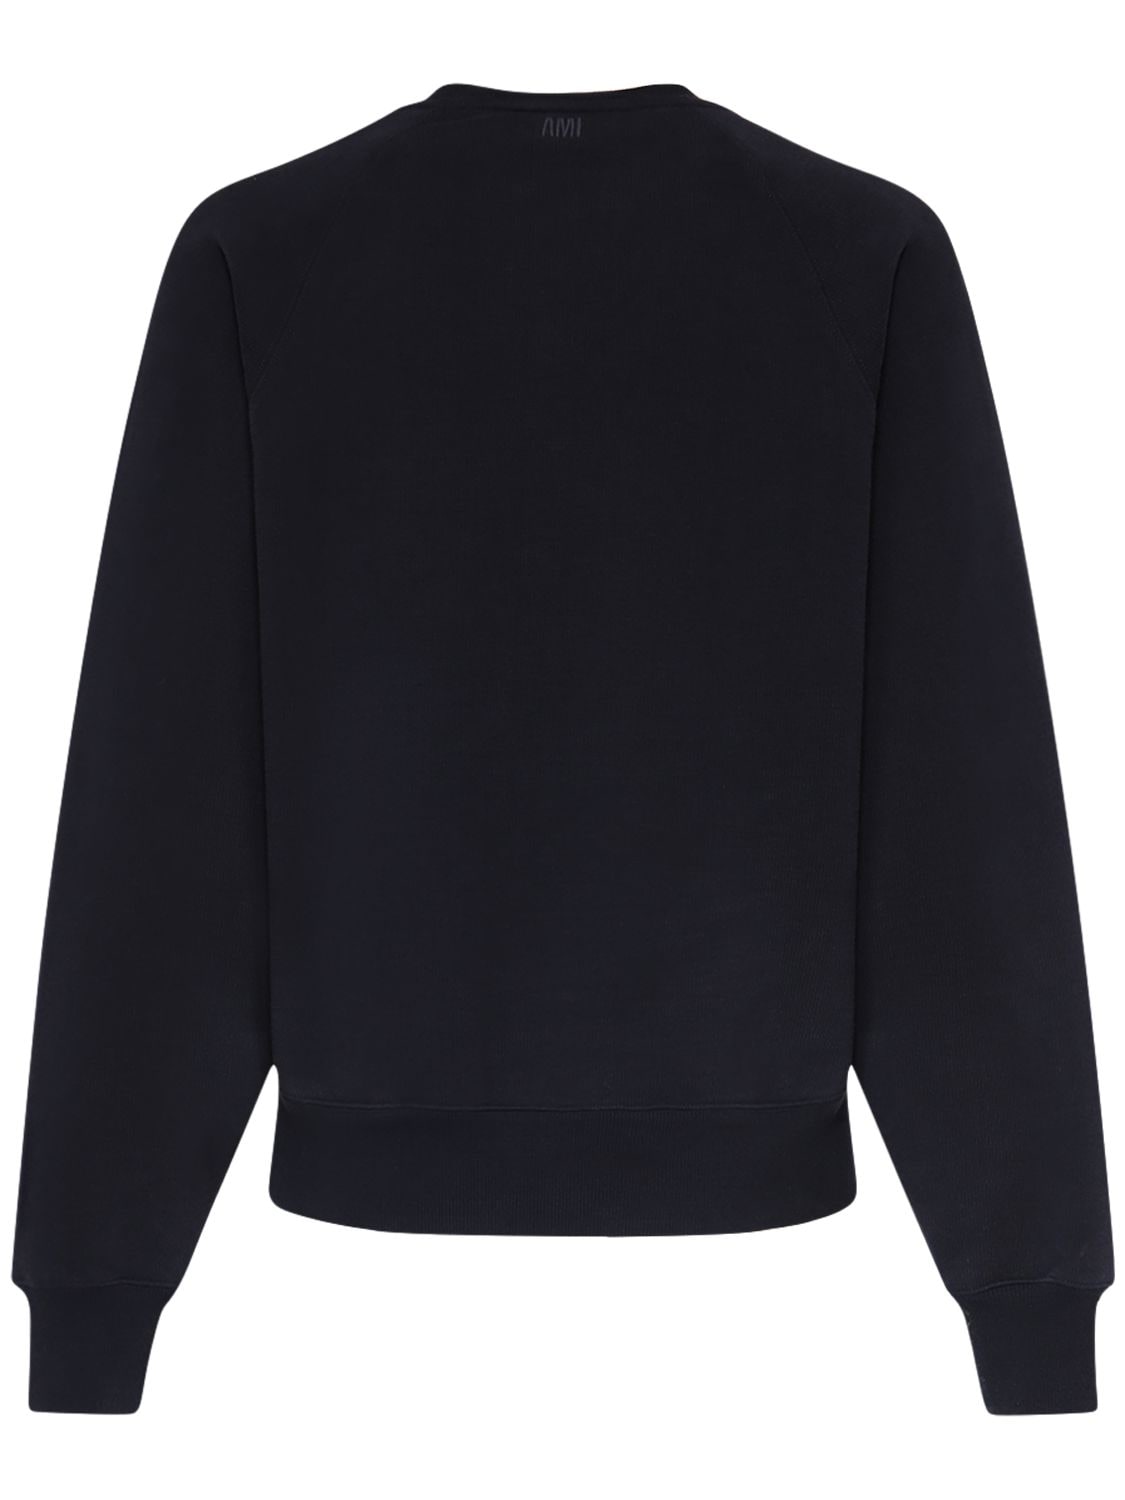 Shop Ami Alexandre Mattiussi Logo Cotton Crewneck Sweatshirt In Black